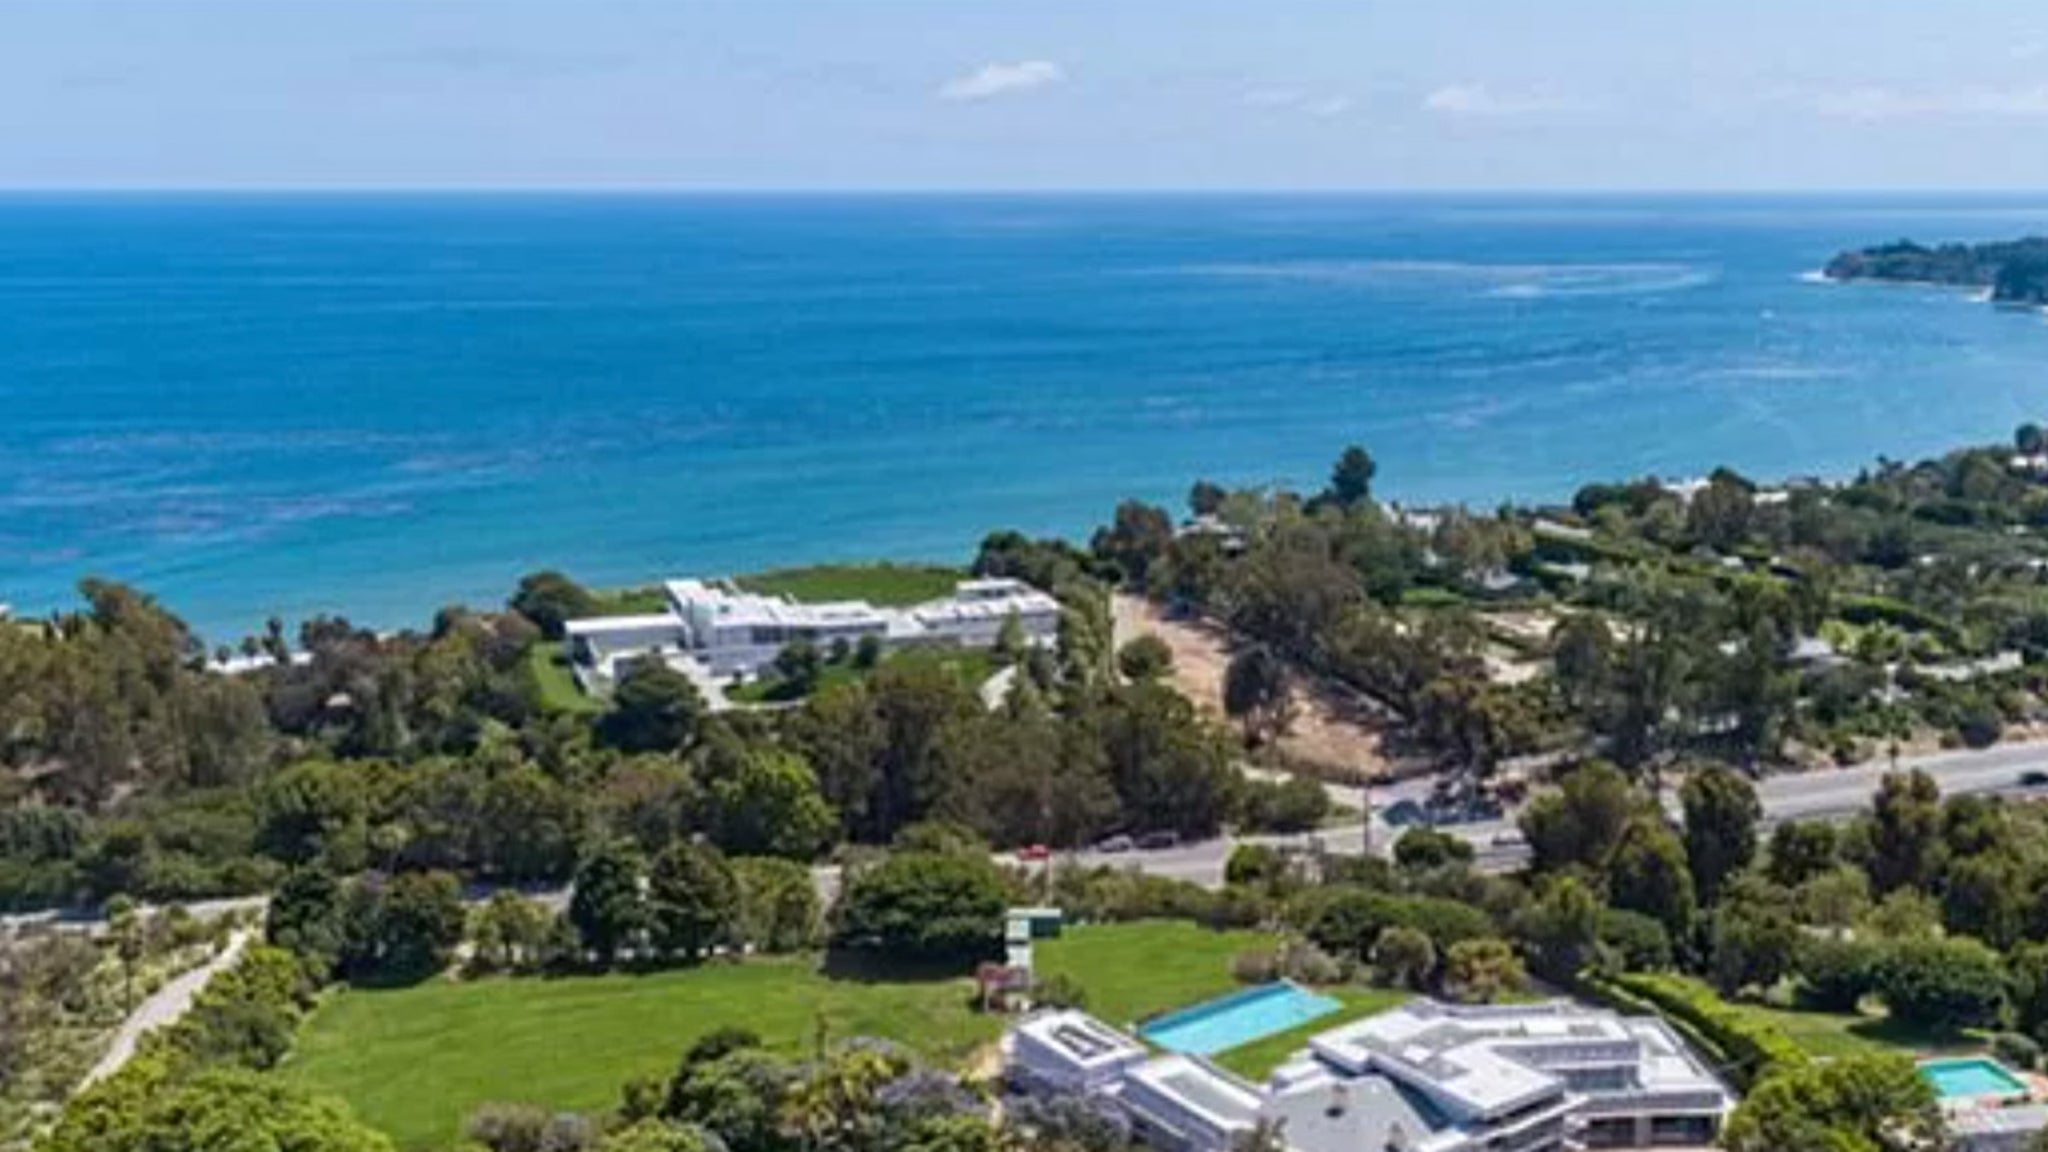 Kevin Garnett Sells Massive Malibu Pad With Ocean Views for $16 Million